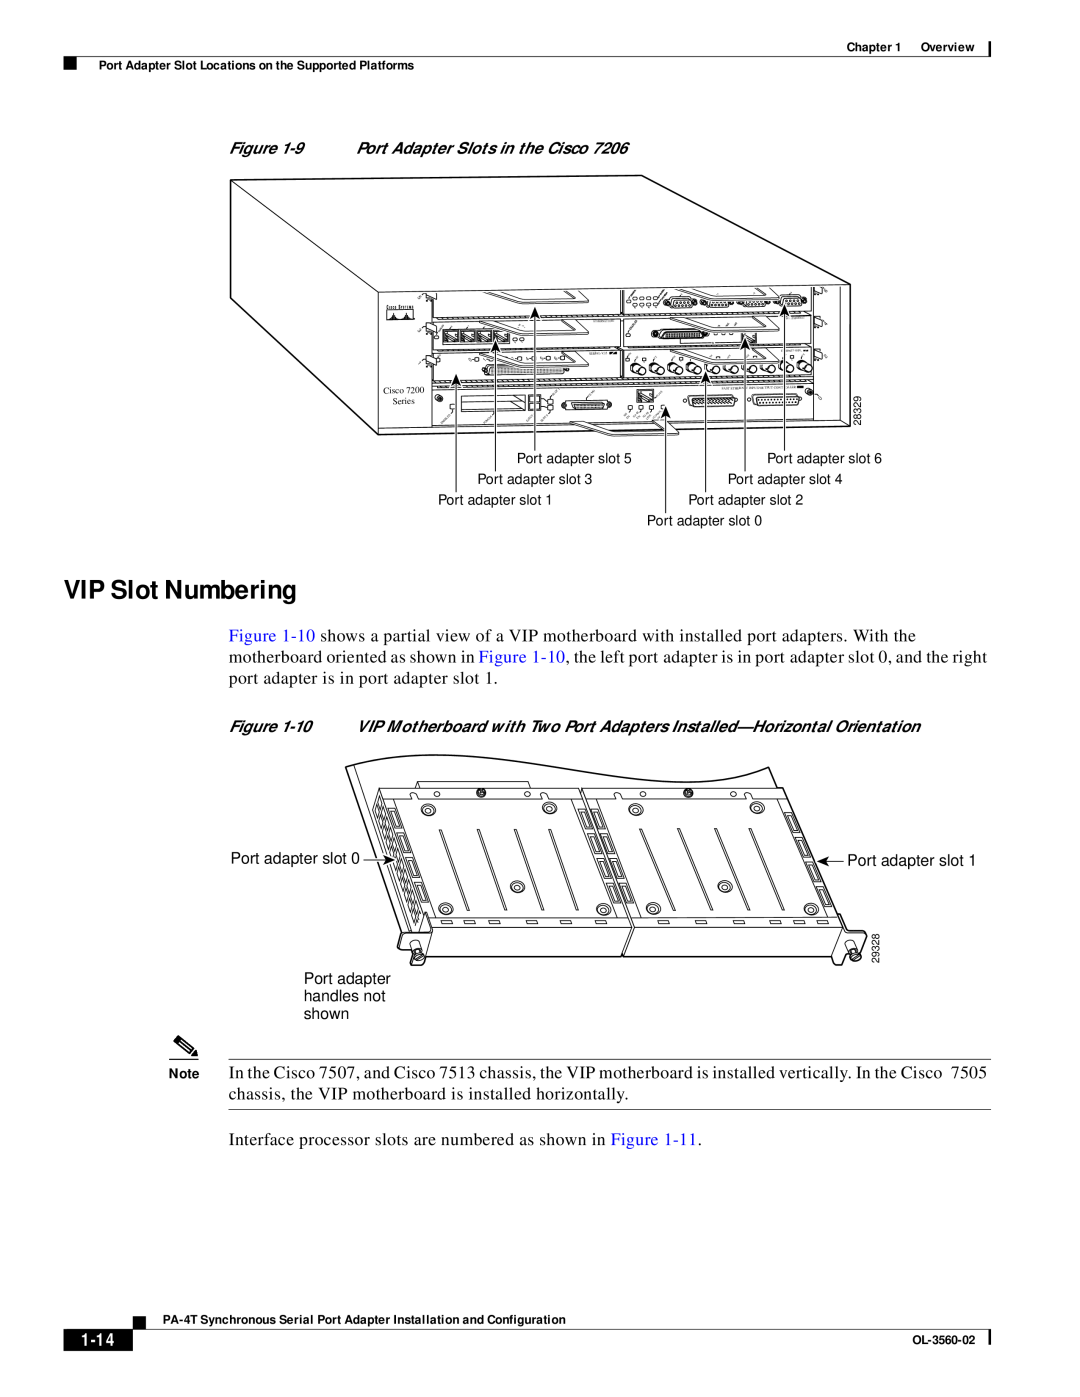 Cisco Systems OL-3560-02 VIP Slot Numbering, 1-14, Port adapter slot, handles not, shown, 28329, ETHERNET 10BT SERIAL-V.35 